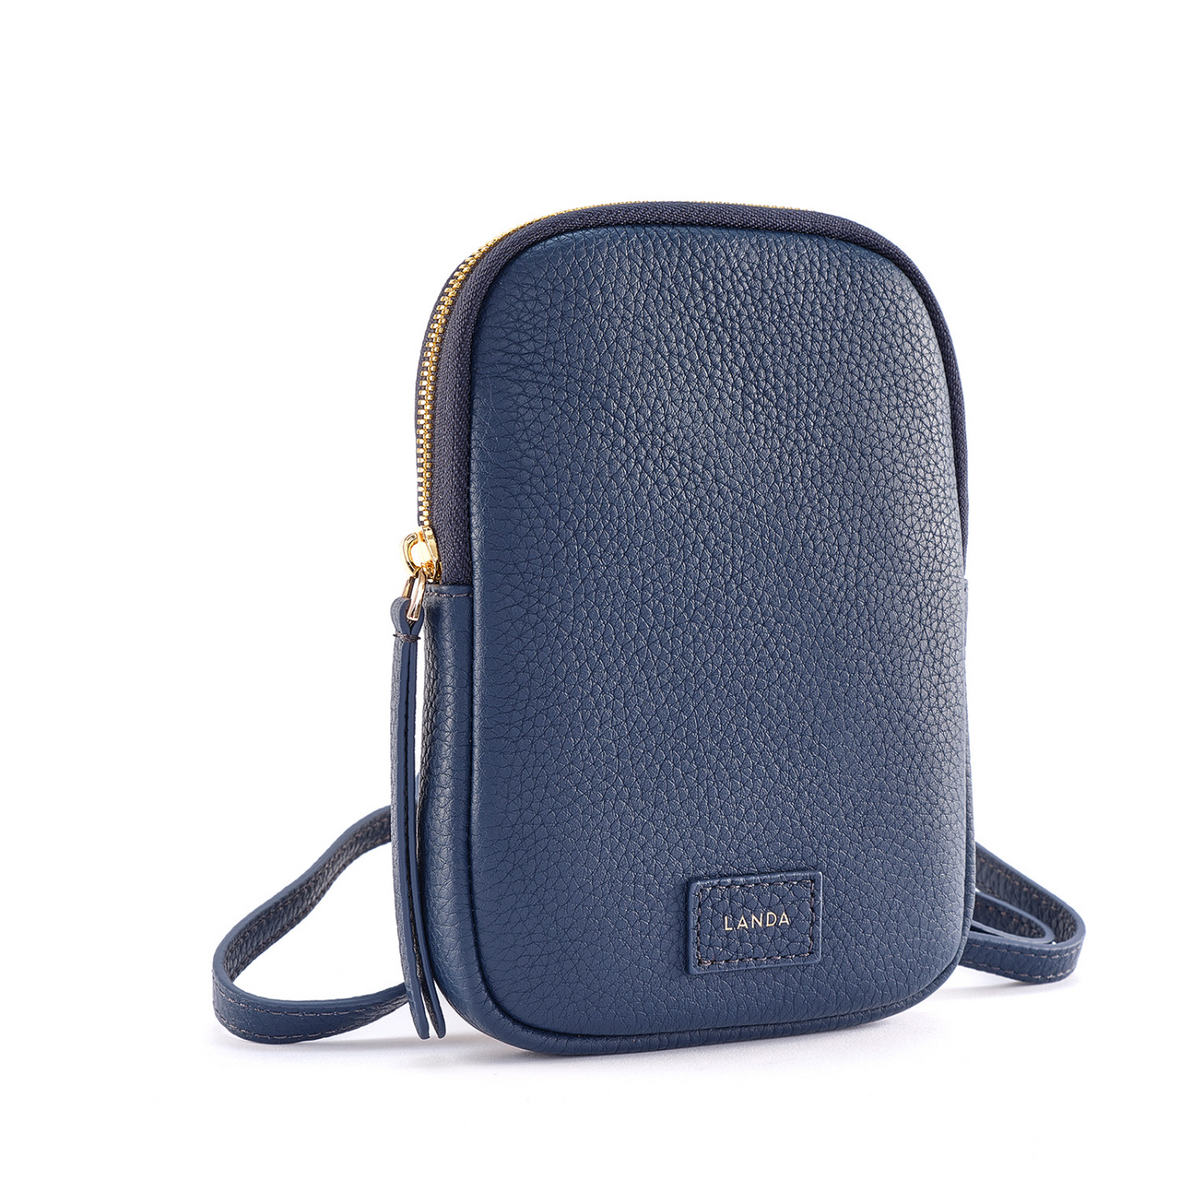 Landa Leather Cassia Phone Bag | Navy